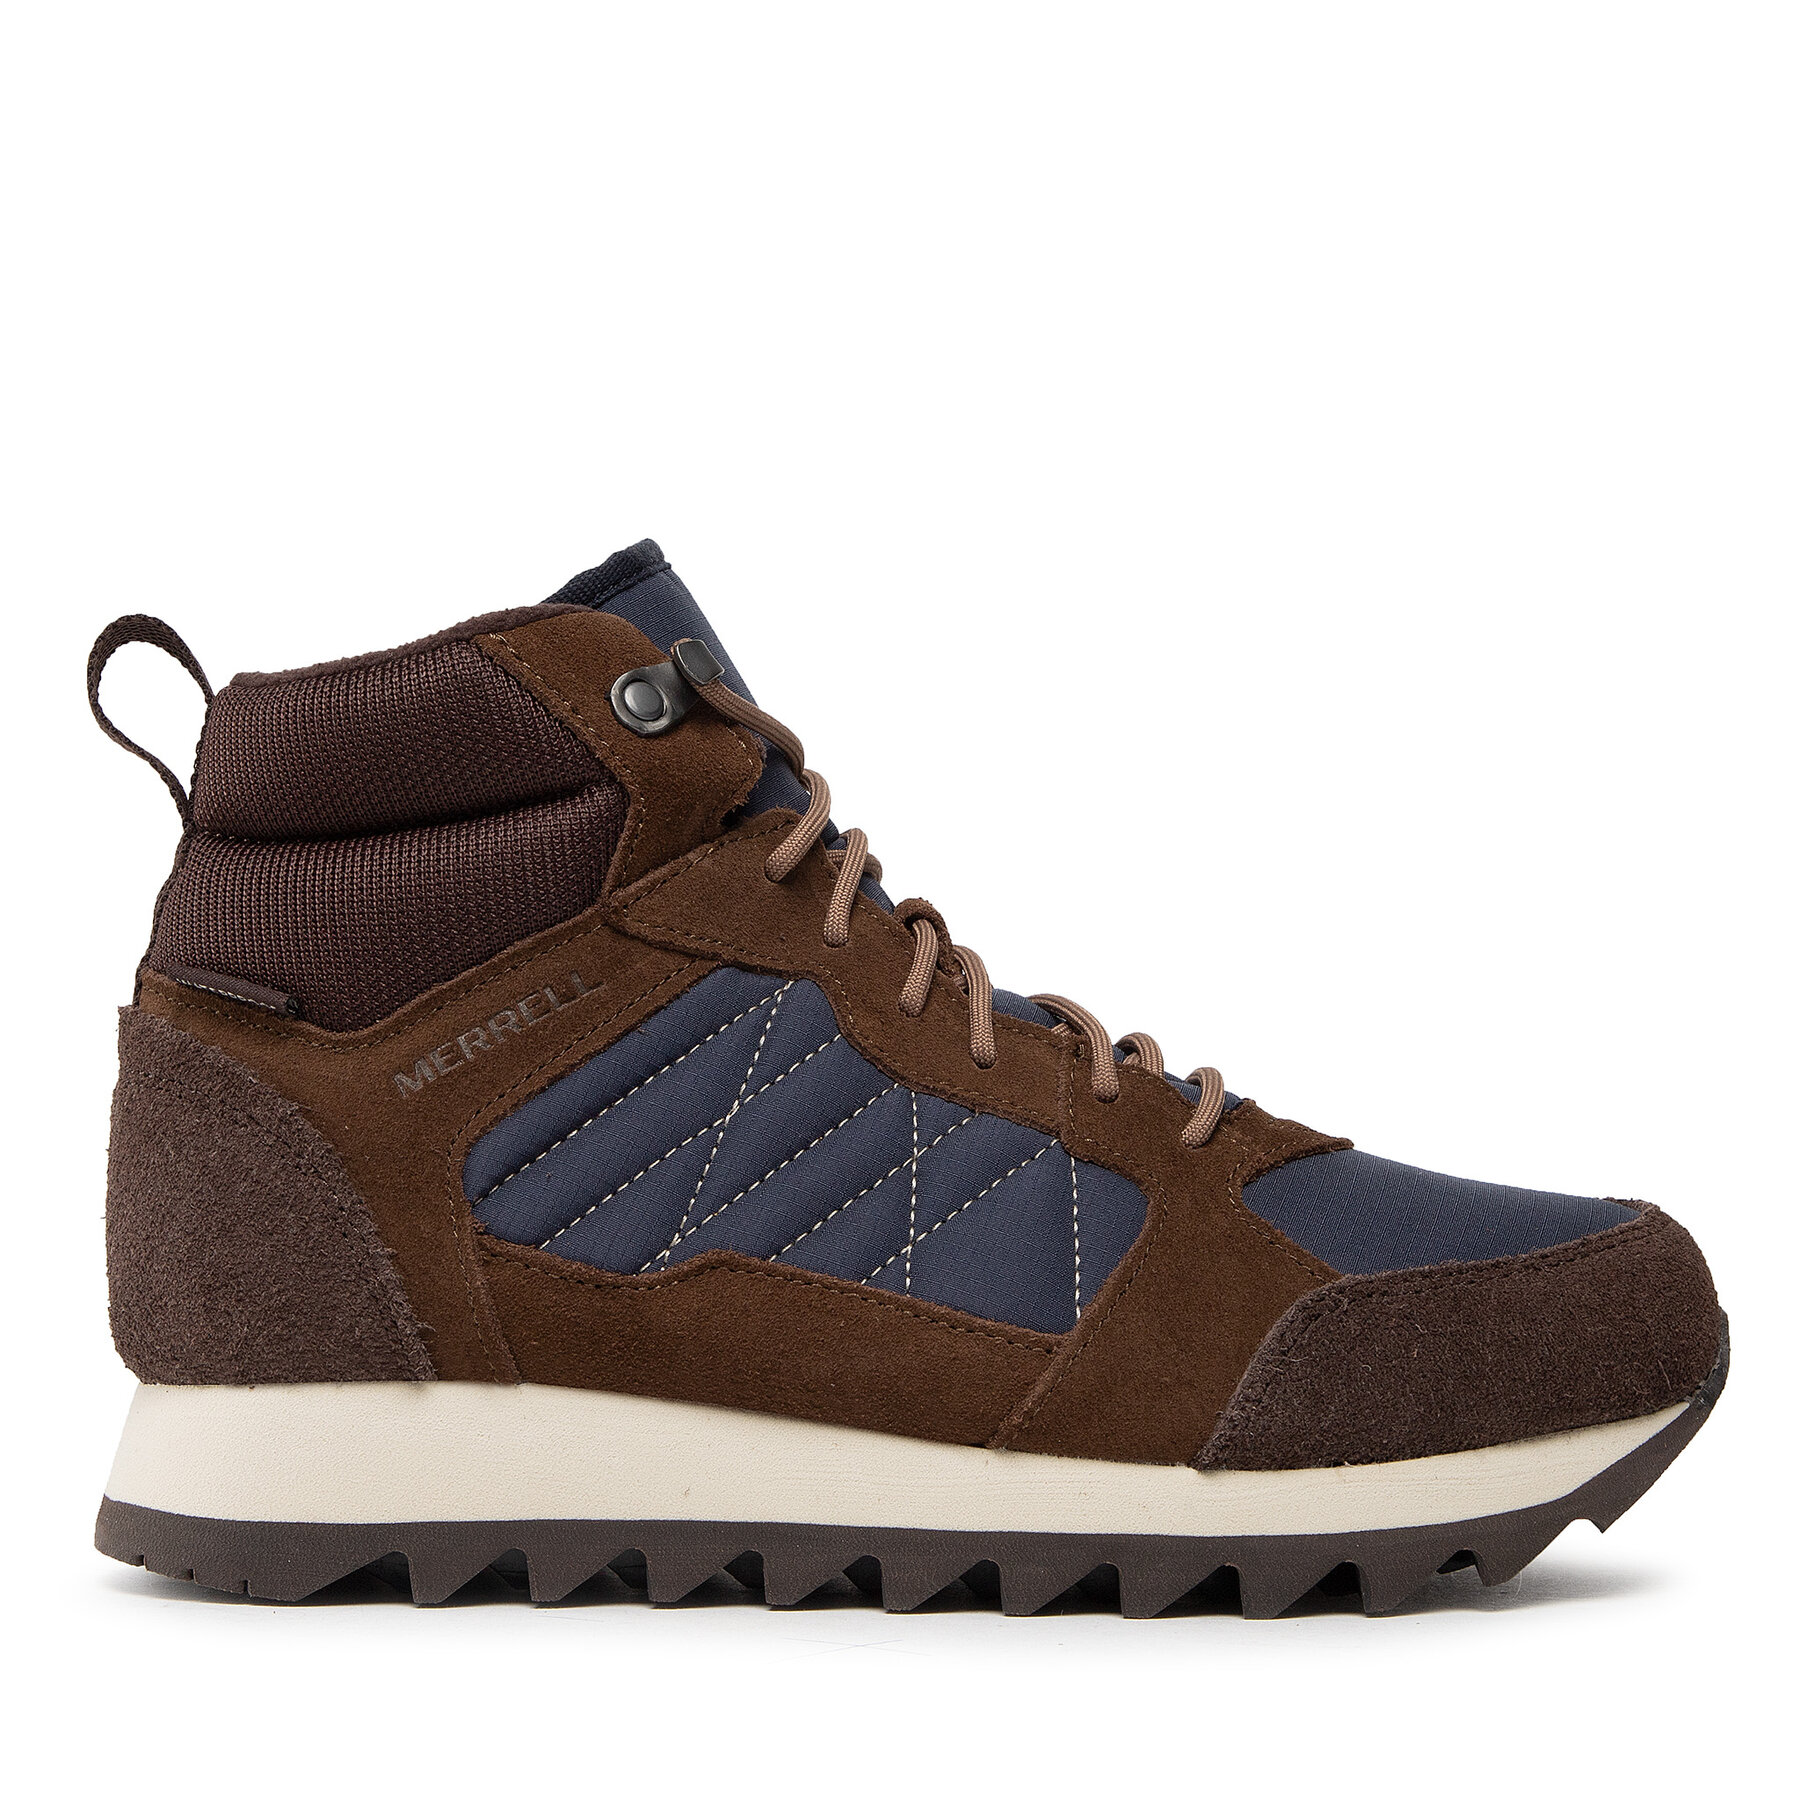 Schuhe Merrell Alpine Sneaker Mid Plr Wp 2 J004295 Terre von Merrell